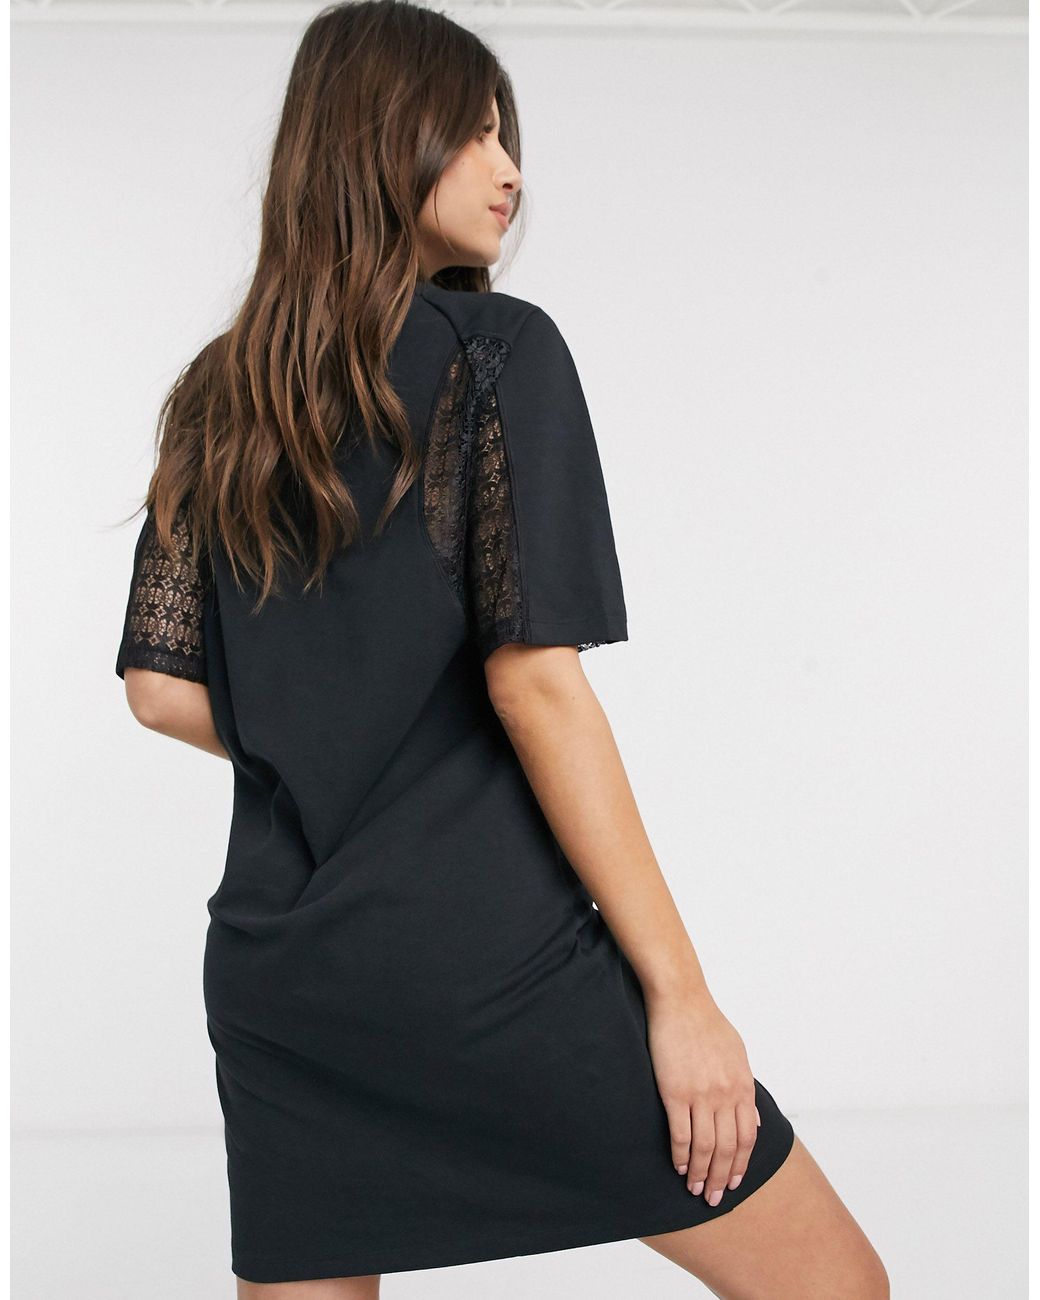 adidas Originals Bellista Lace Insert T-shirt Dress in Black | Lyst